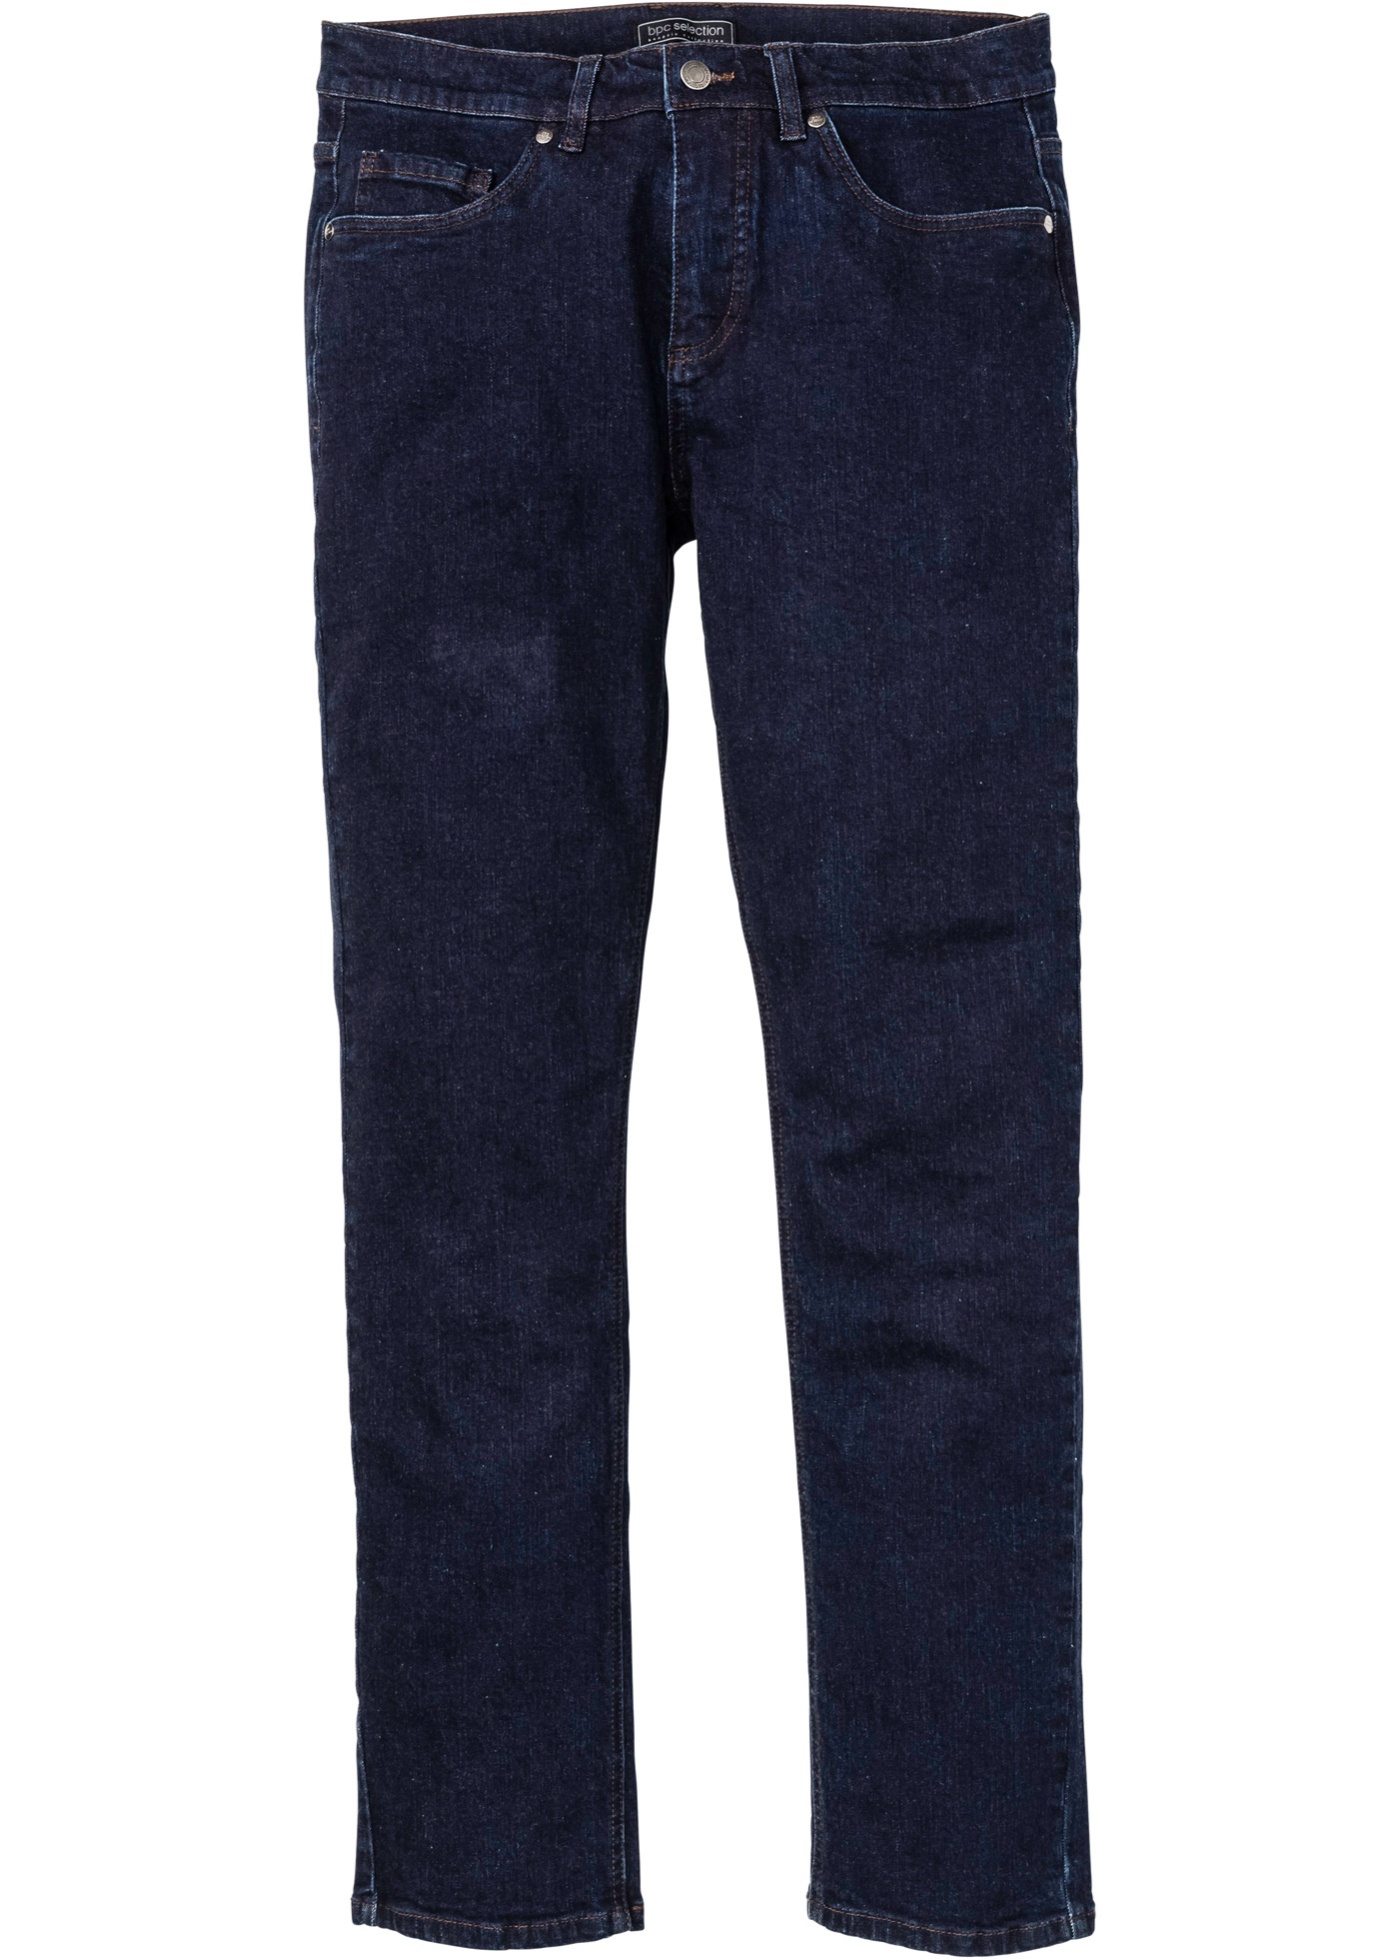 Bonprix - Jeans, 5-ficksmodell, smal passform 349.00